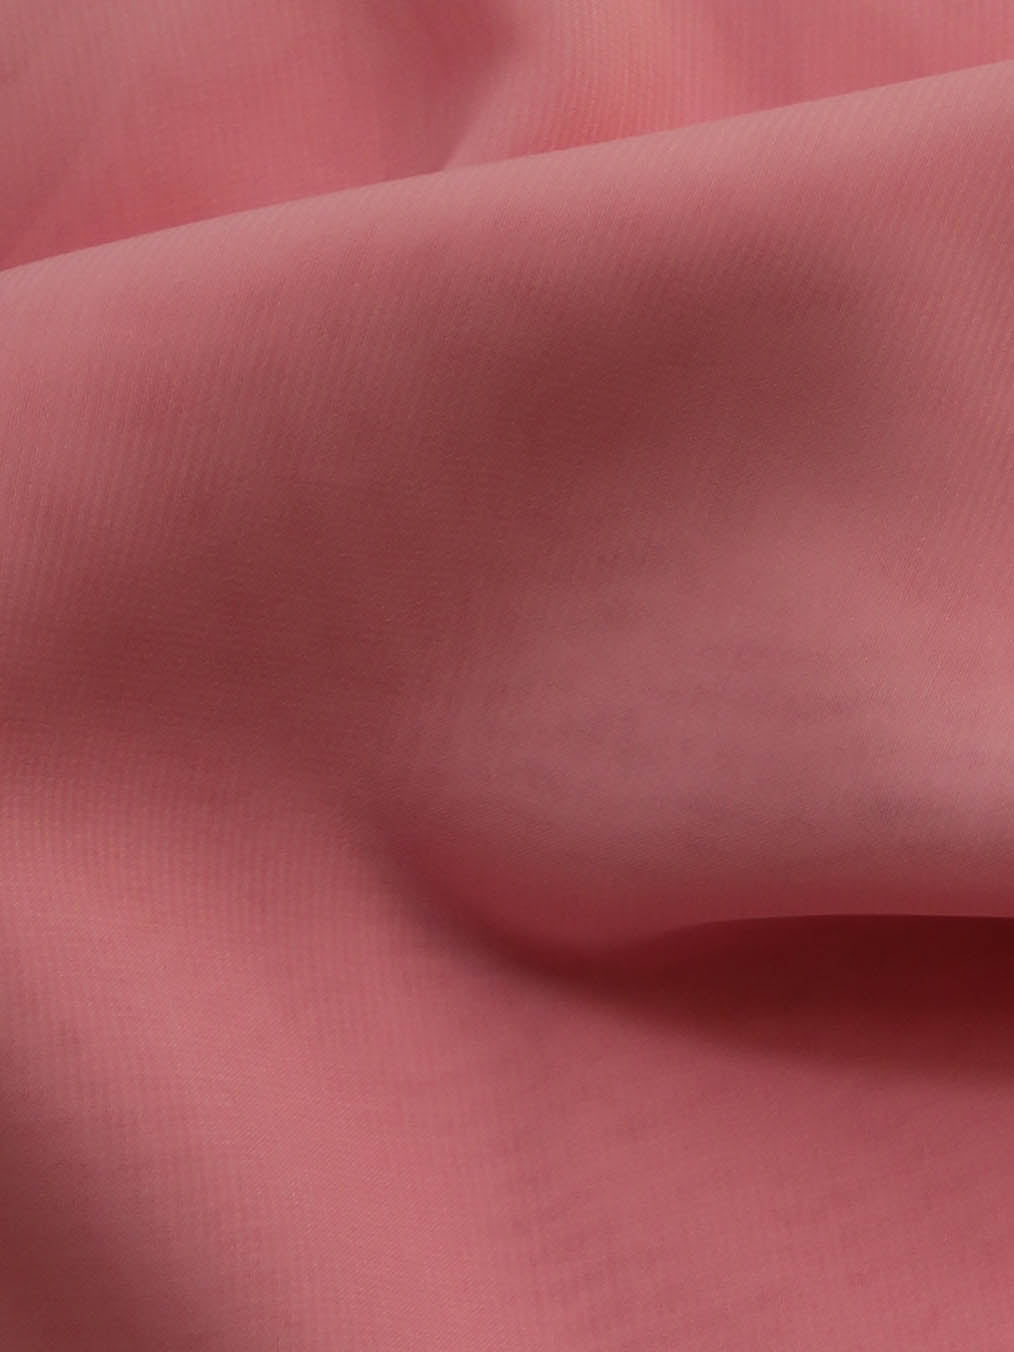 Rosa Polyester-Chiffon (150 cm/59 Zoll) – Benevolence